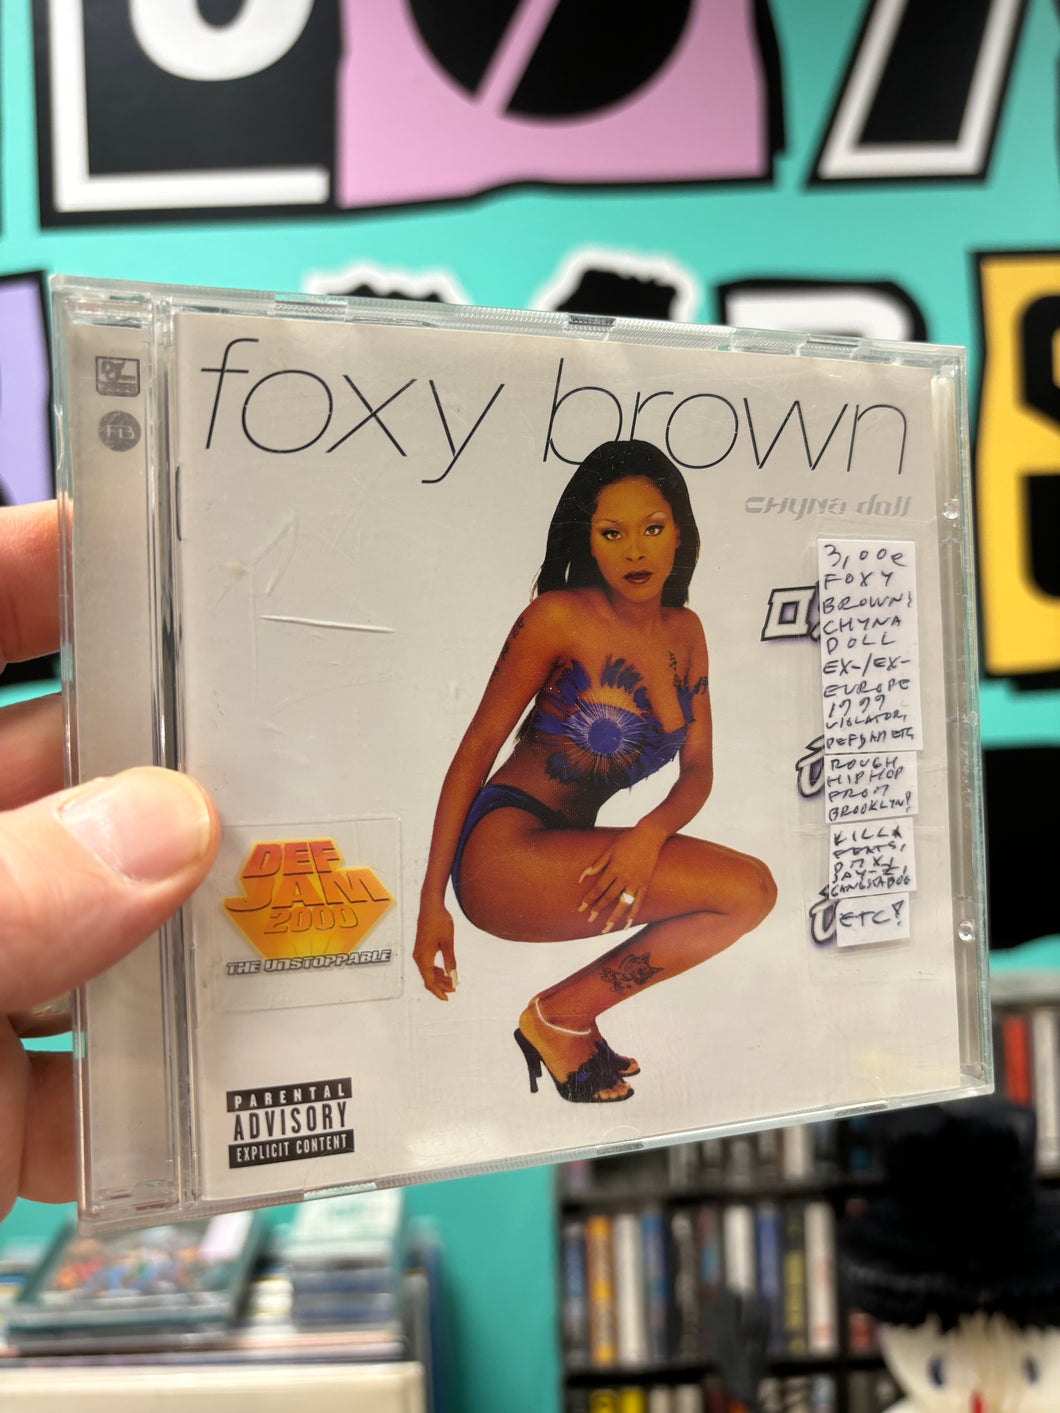 Foxy Brown: Chyna Doll, CD, Europe 1999